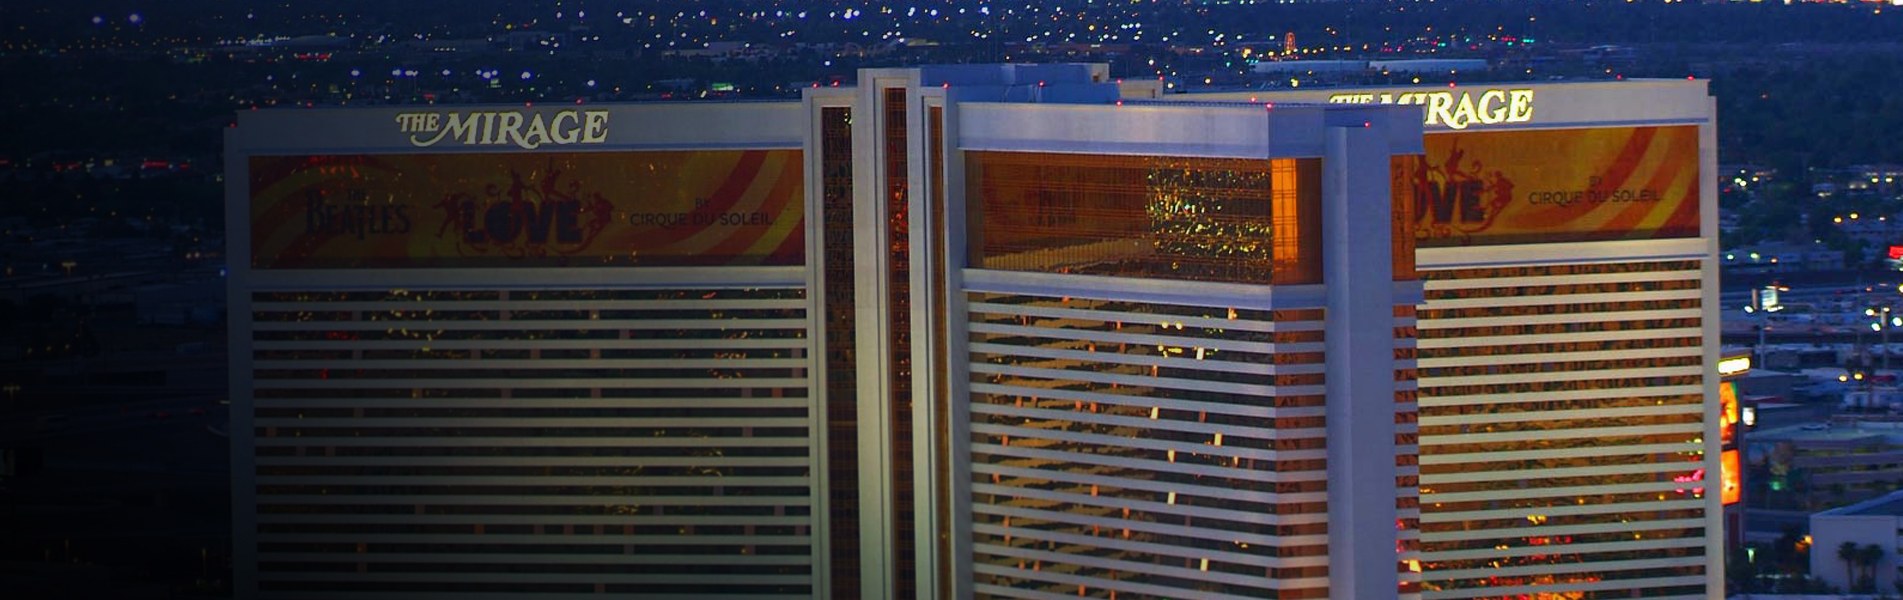 Mirage Casino Las Vegas 1